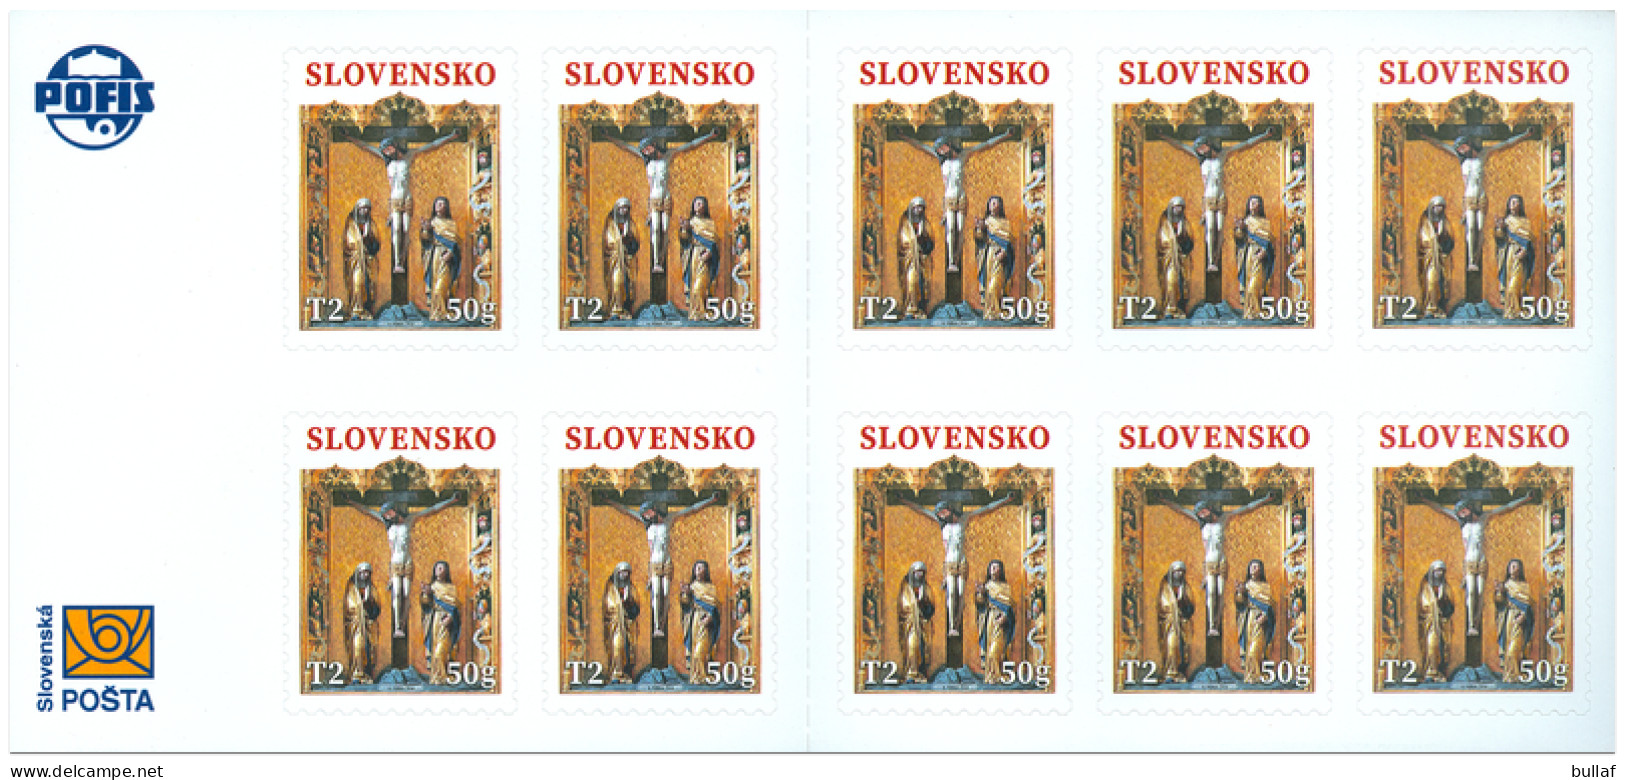 SLOVAKIA 2024 - Easter 2024: The Internal Fixtures Of The Basilica Minor Of St. Giles, Bardejov - Blocks & Sheetlets